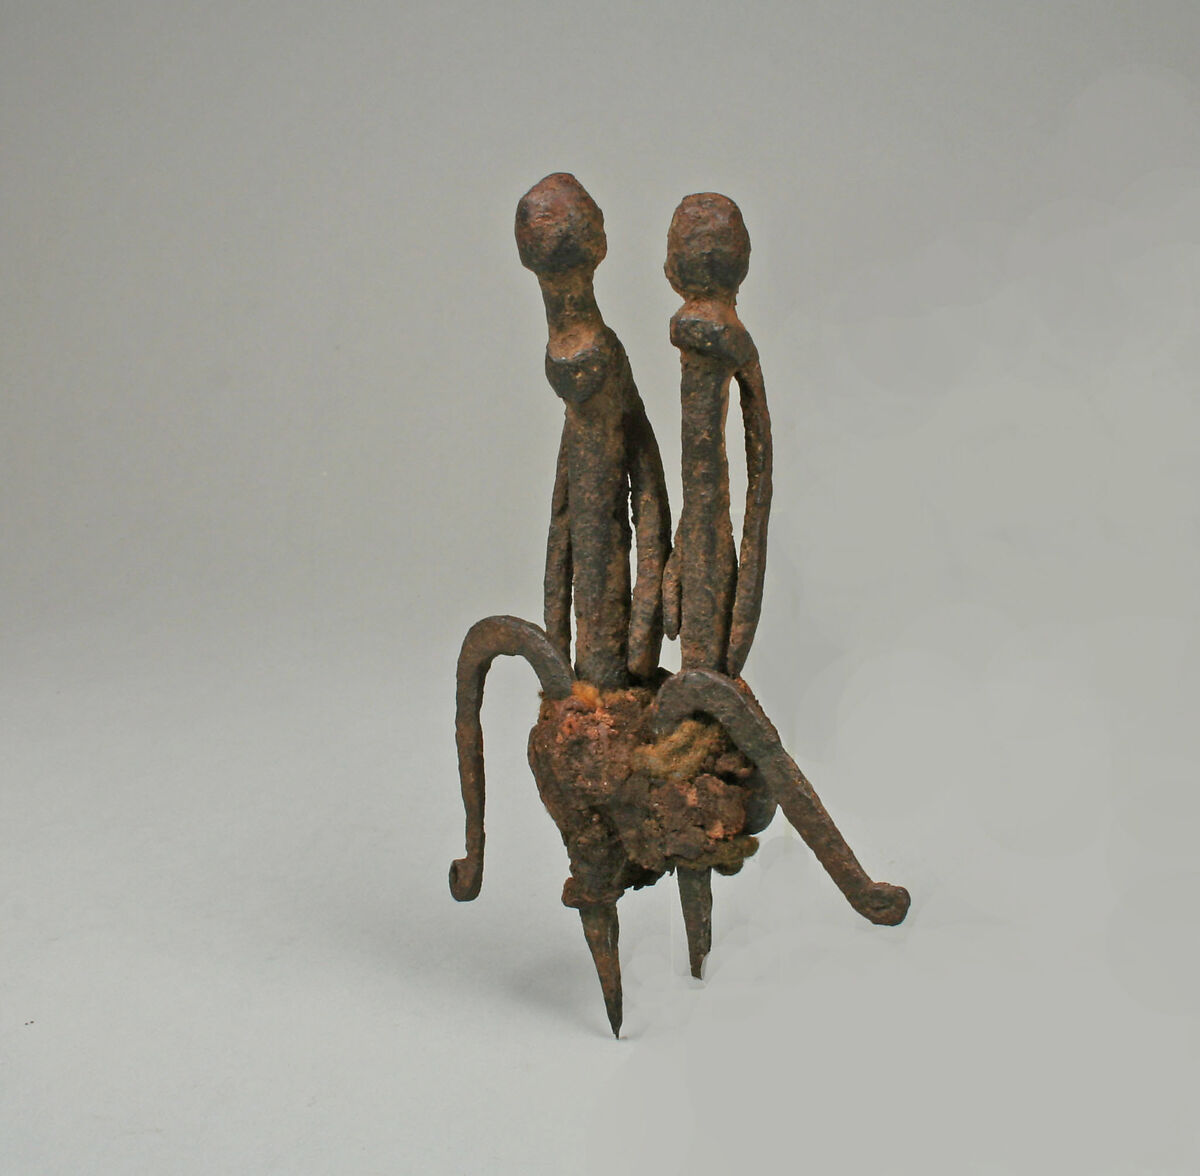 Figures Ornament, Iron, sacrificial materials, Dogon peoples 